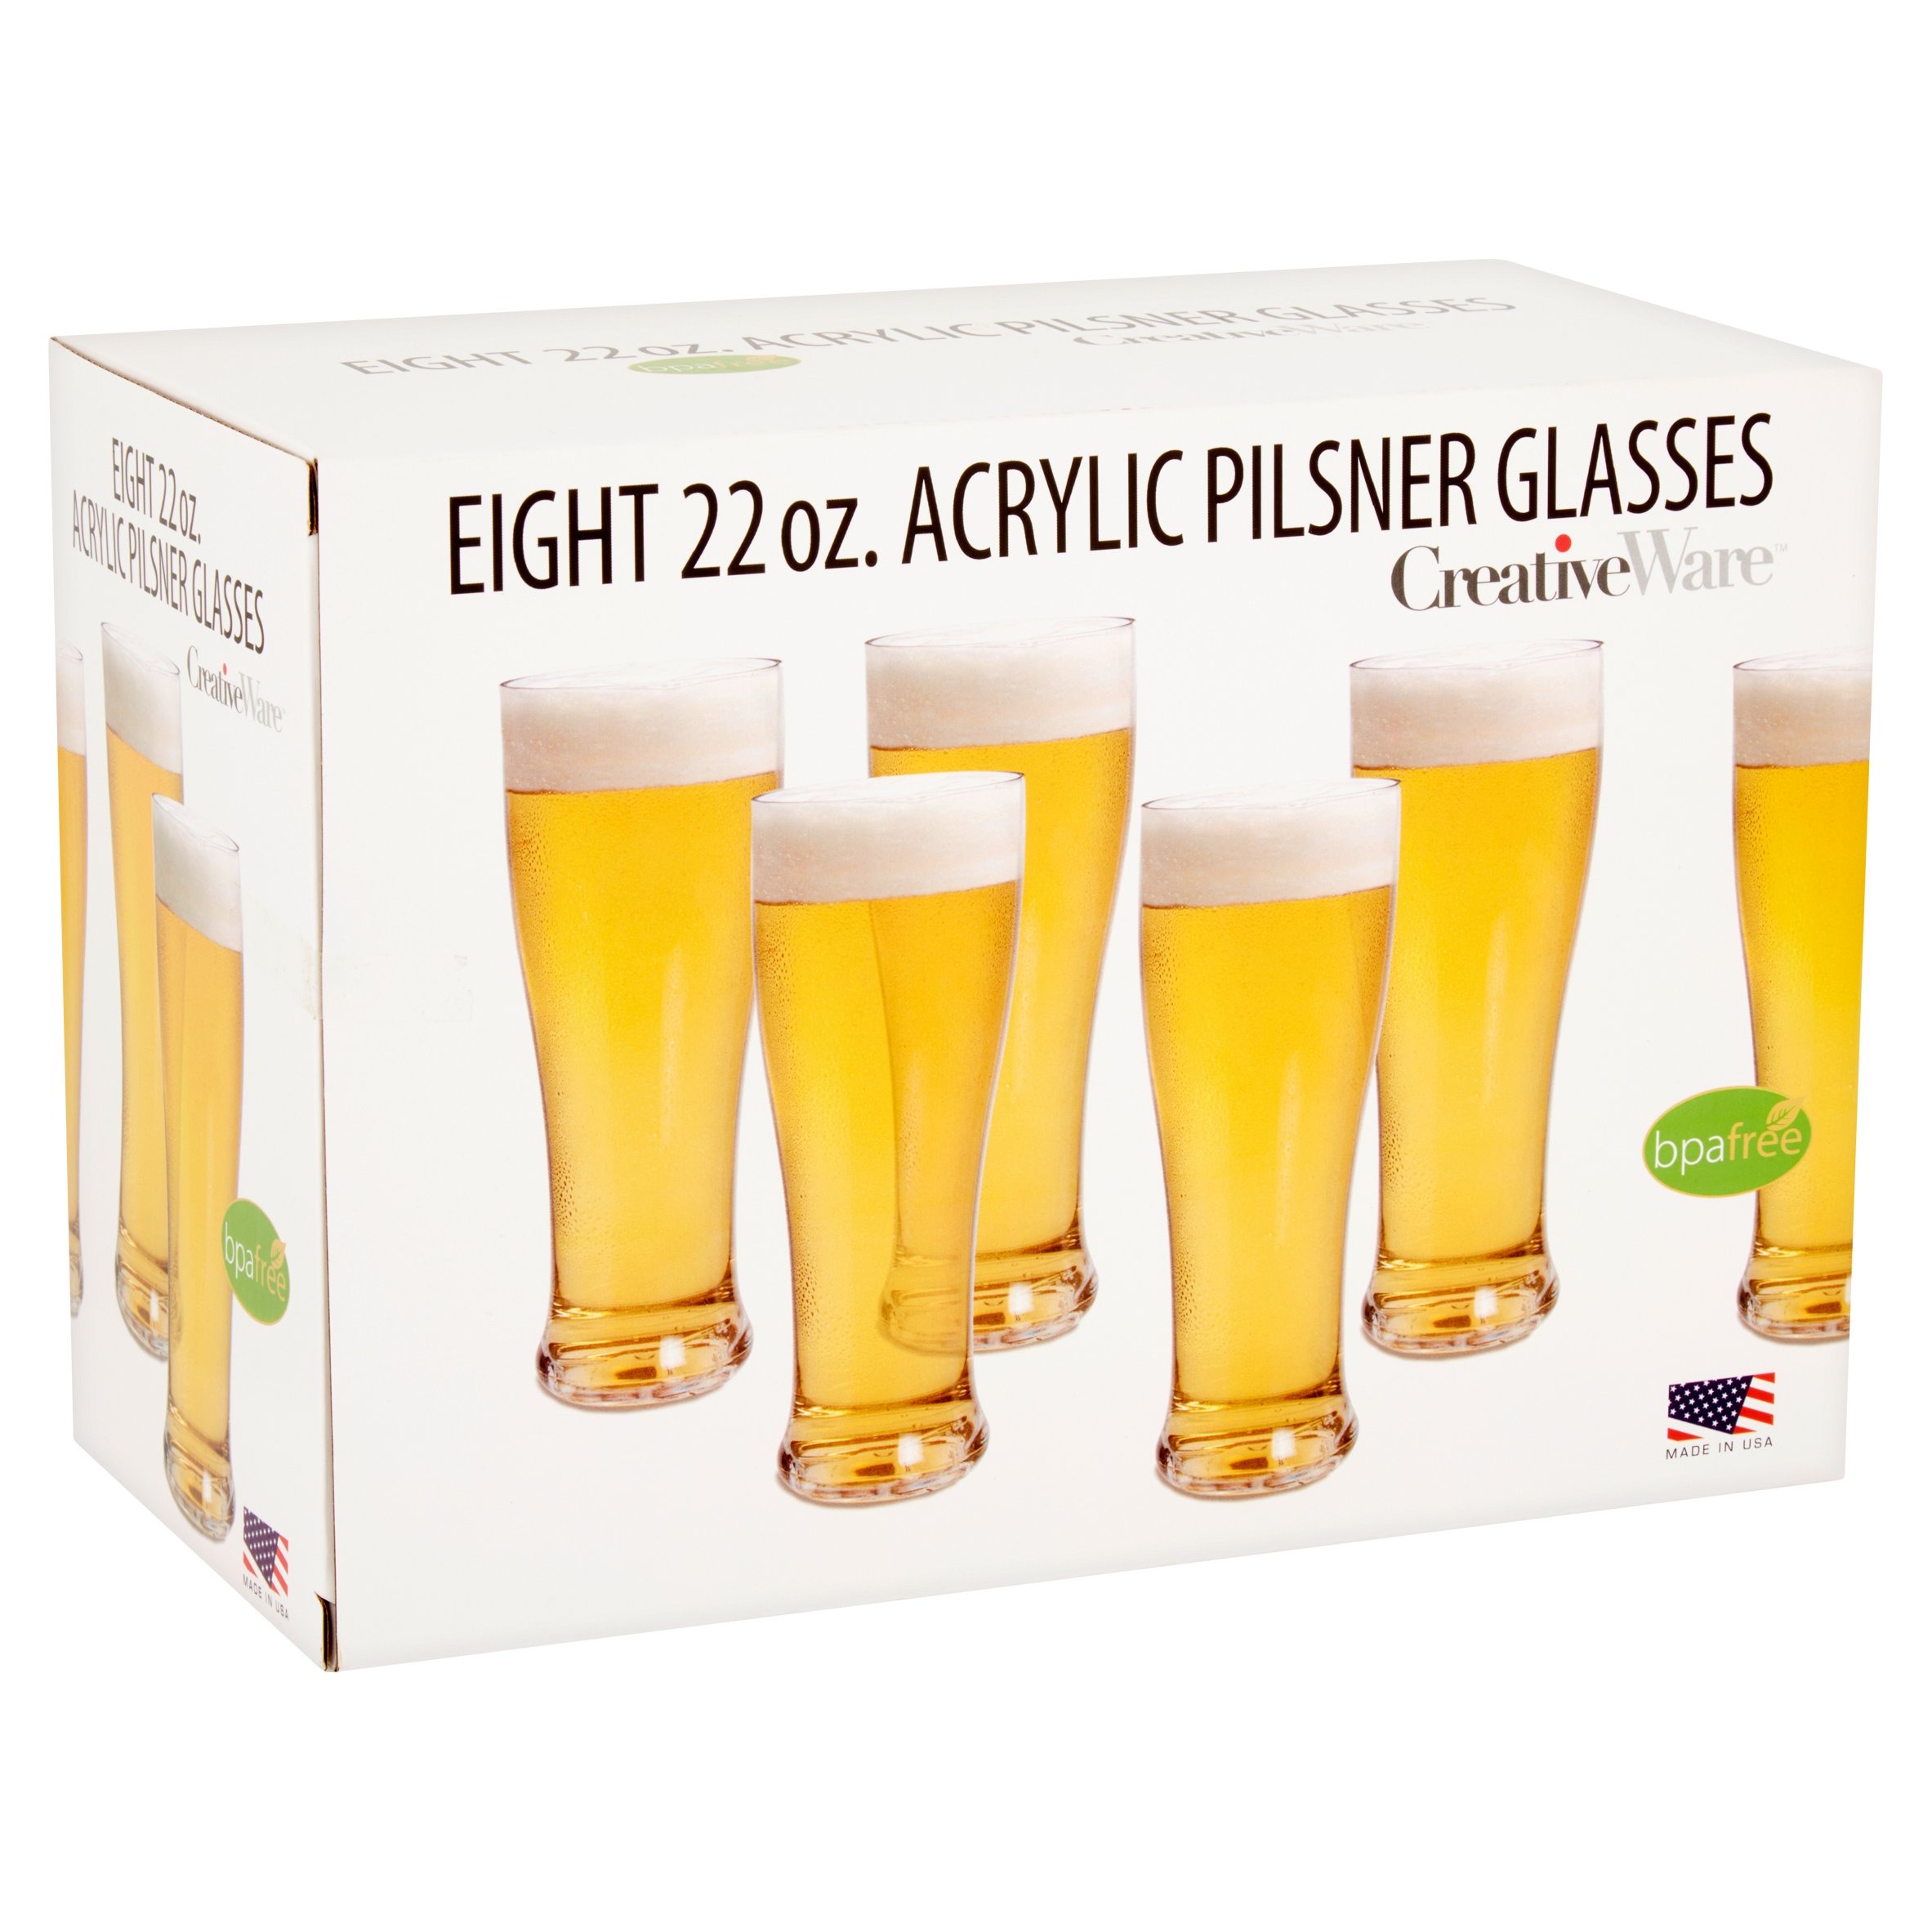 Creative Ware 22 oz. Eight Acrylic Pilsner Glasses - image 2 of 5